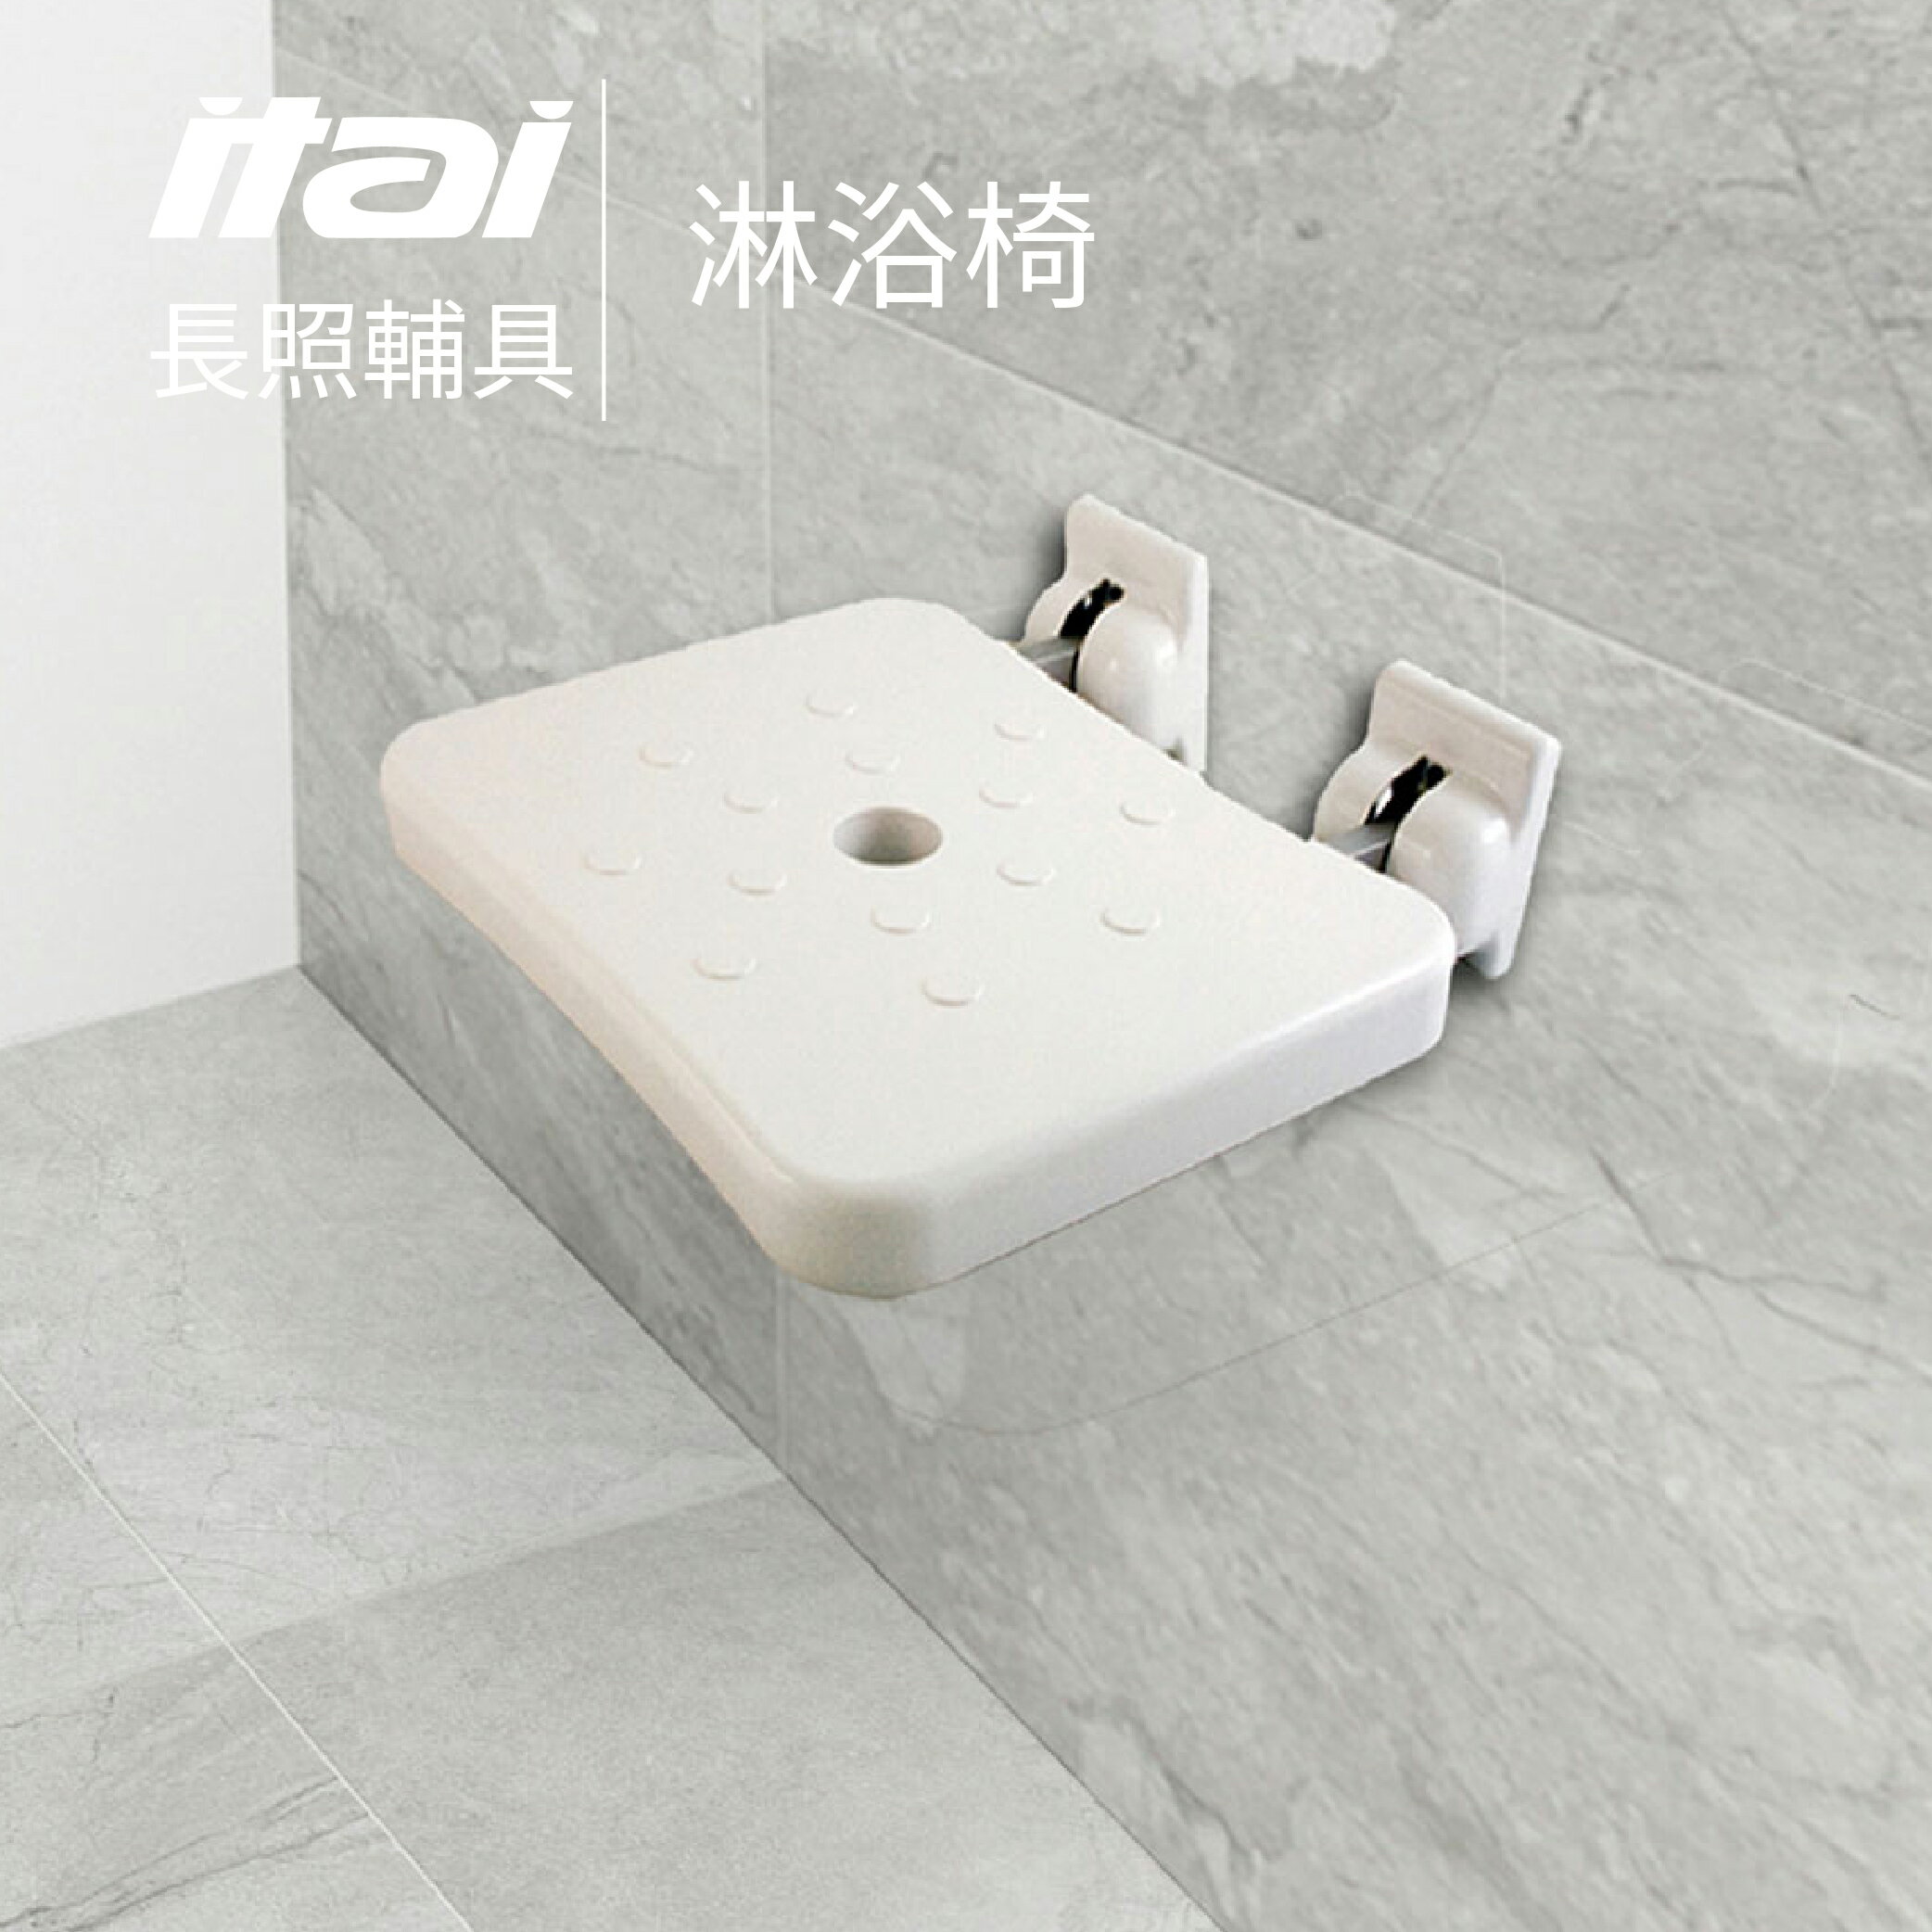 【ITAI 一太衛浴】淋浴椅 ET-SB001 輔具照護 長照 淋浴椅 衛浴 居家安全 防撞 防摔 抗菌 安全